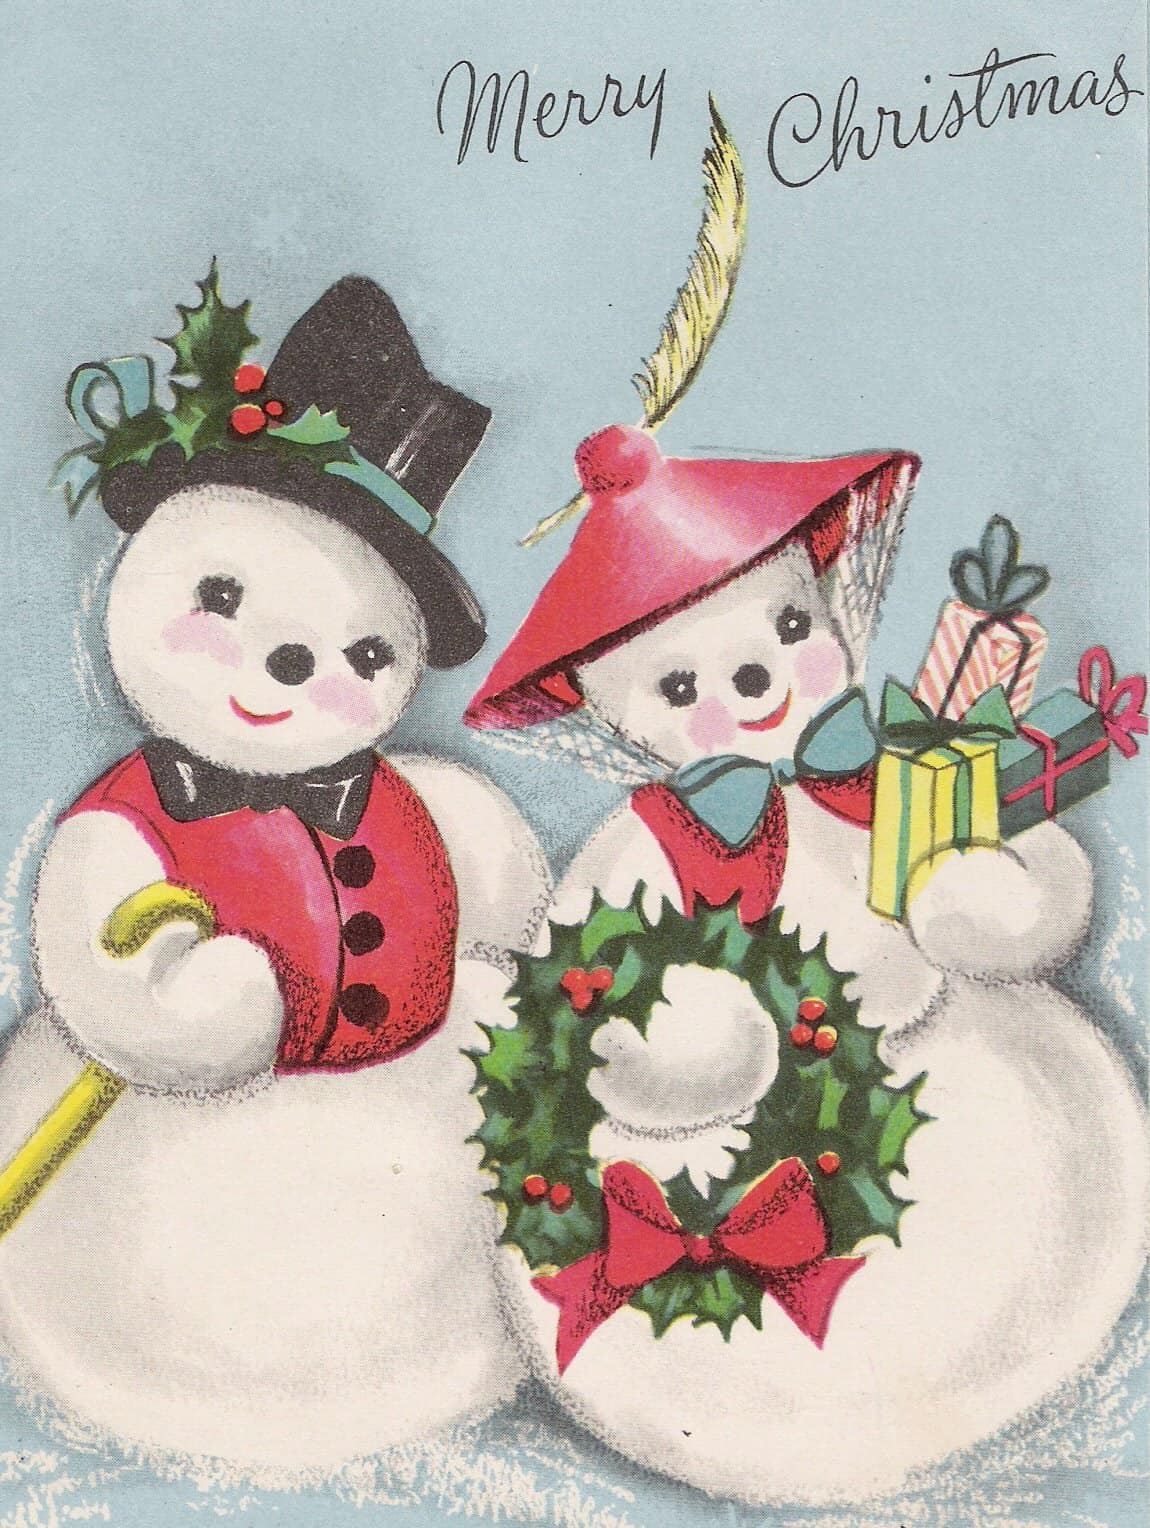 Christmas-cards-2-snowman (3) - RetroGraphik